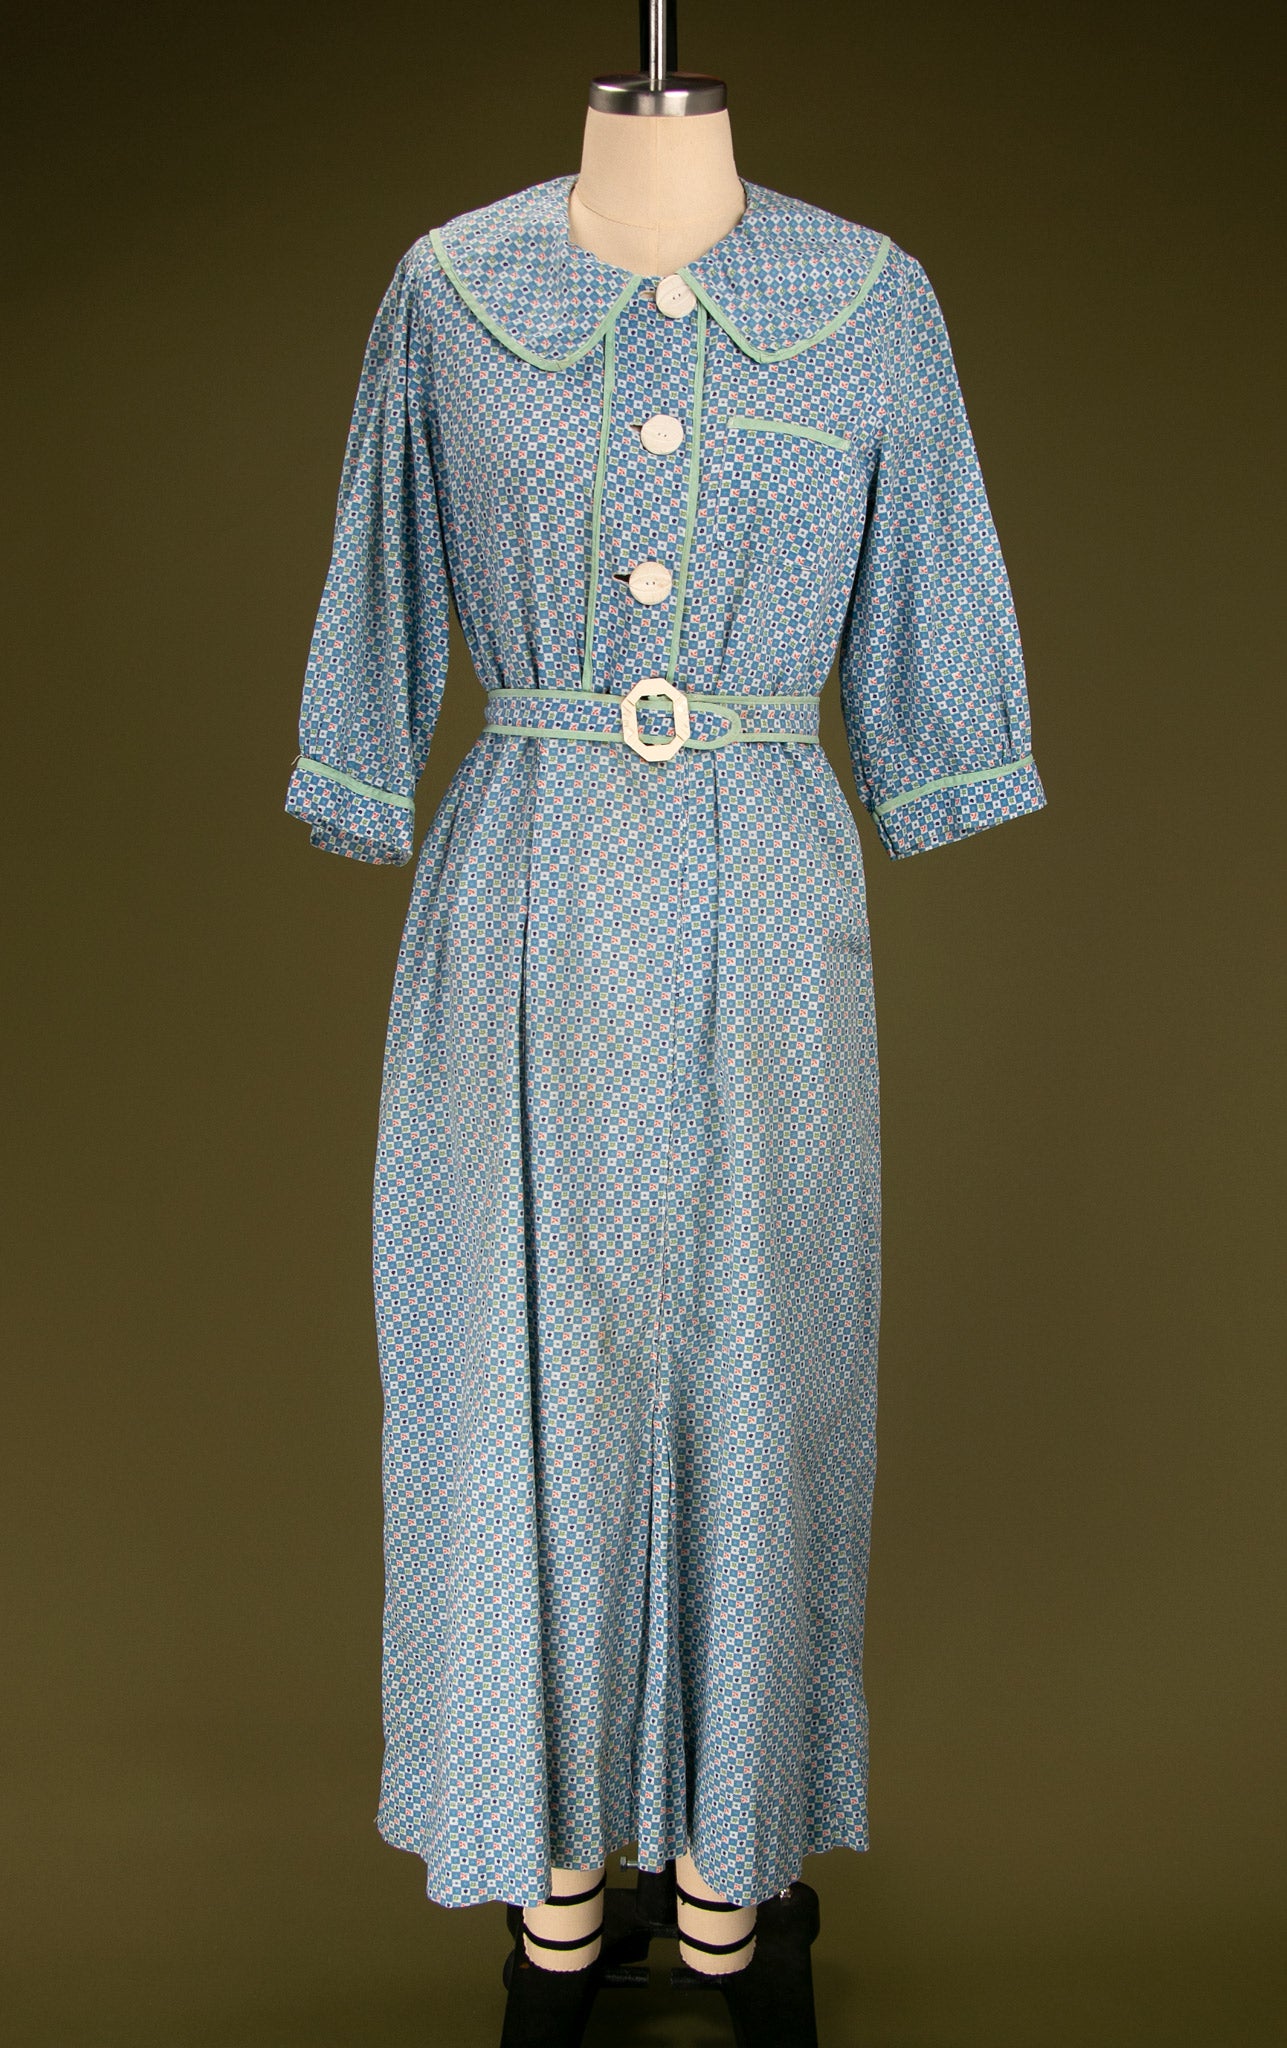 Vintage 1930's Depression Era Blue Farm Dress